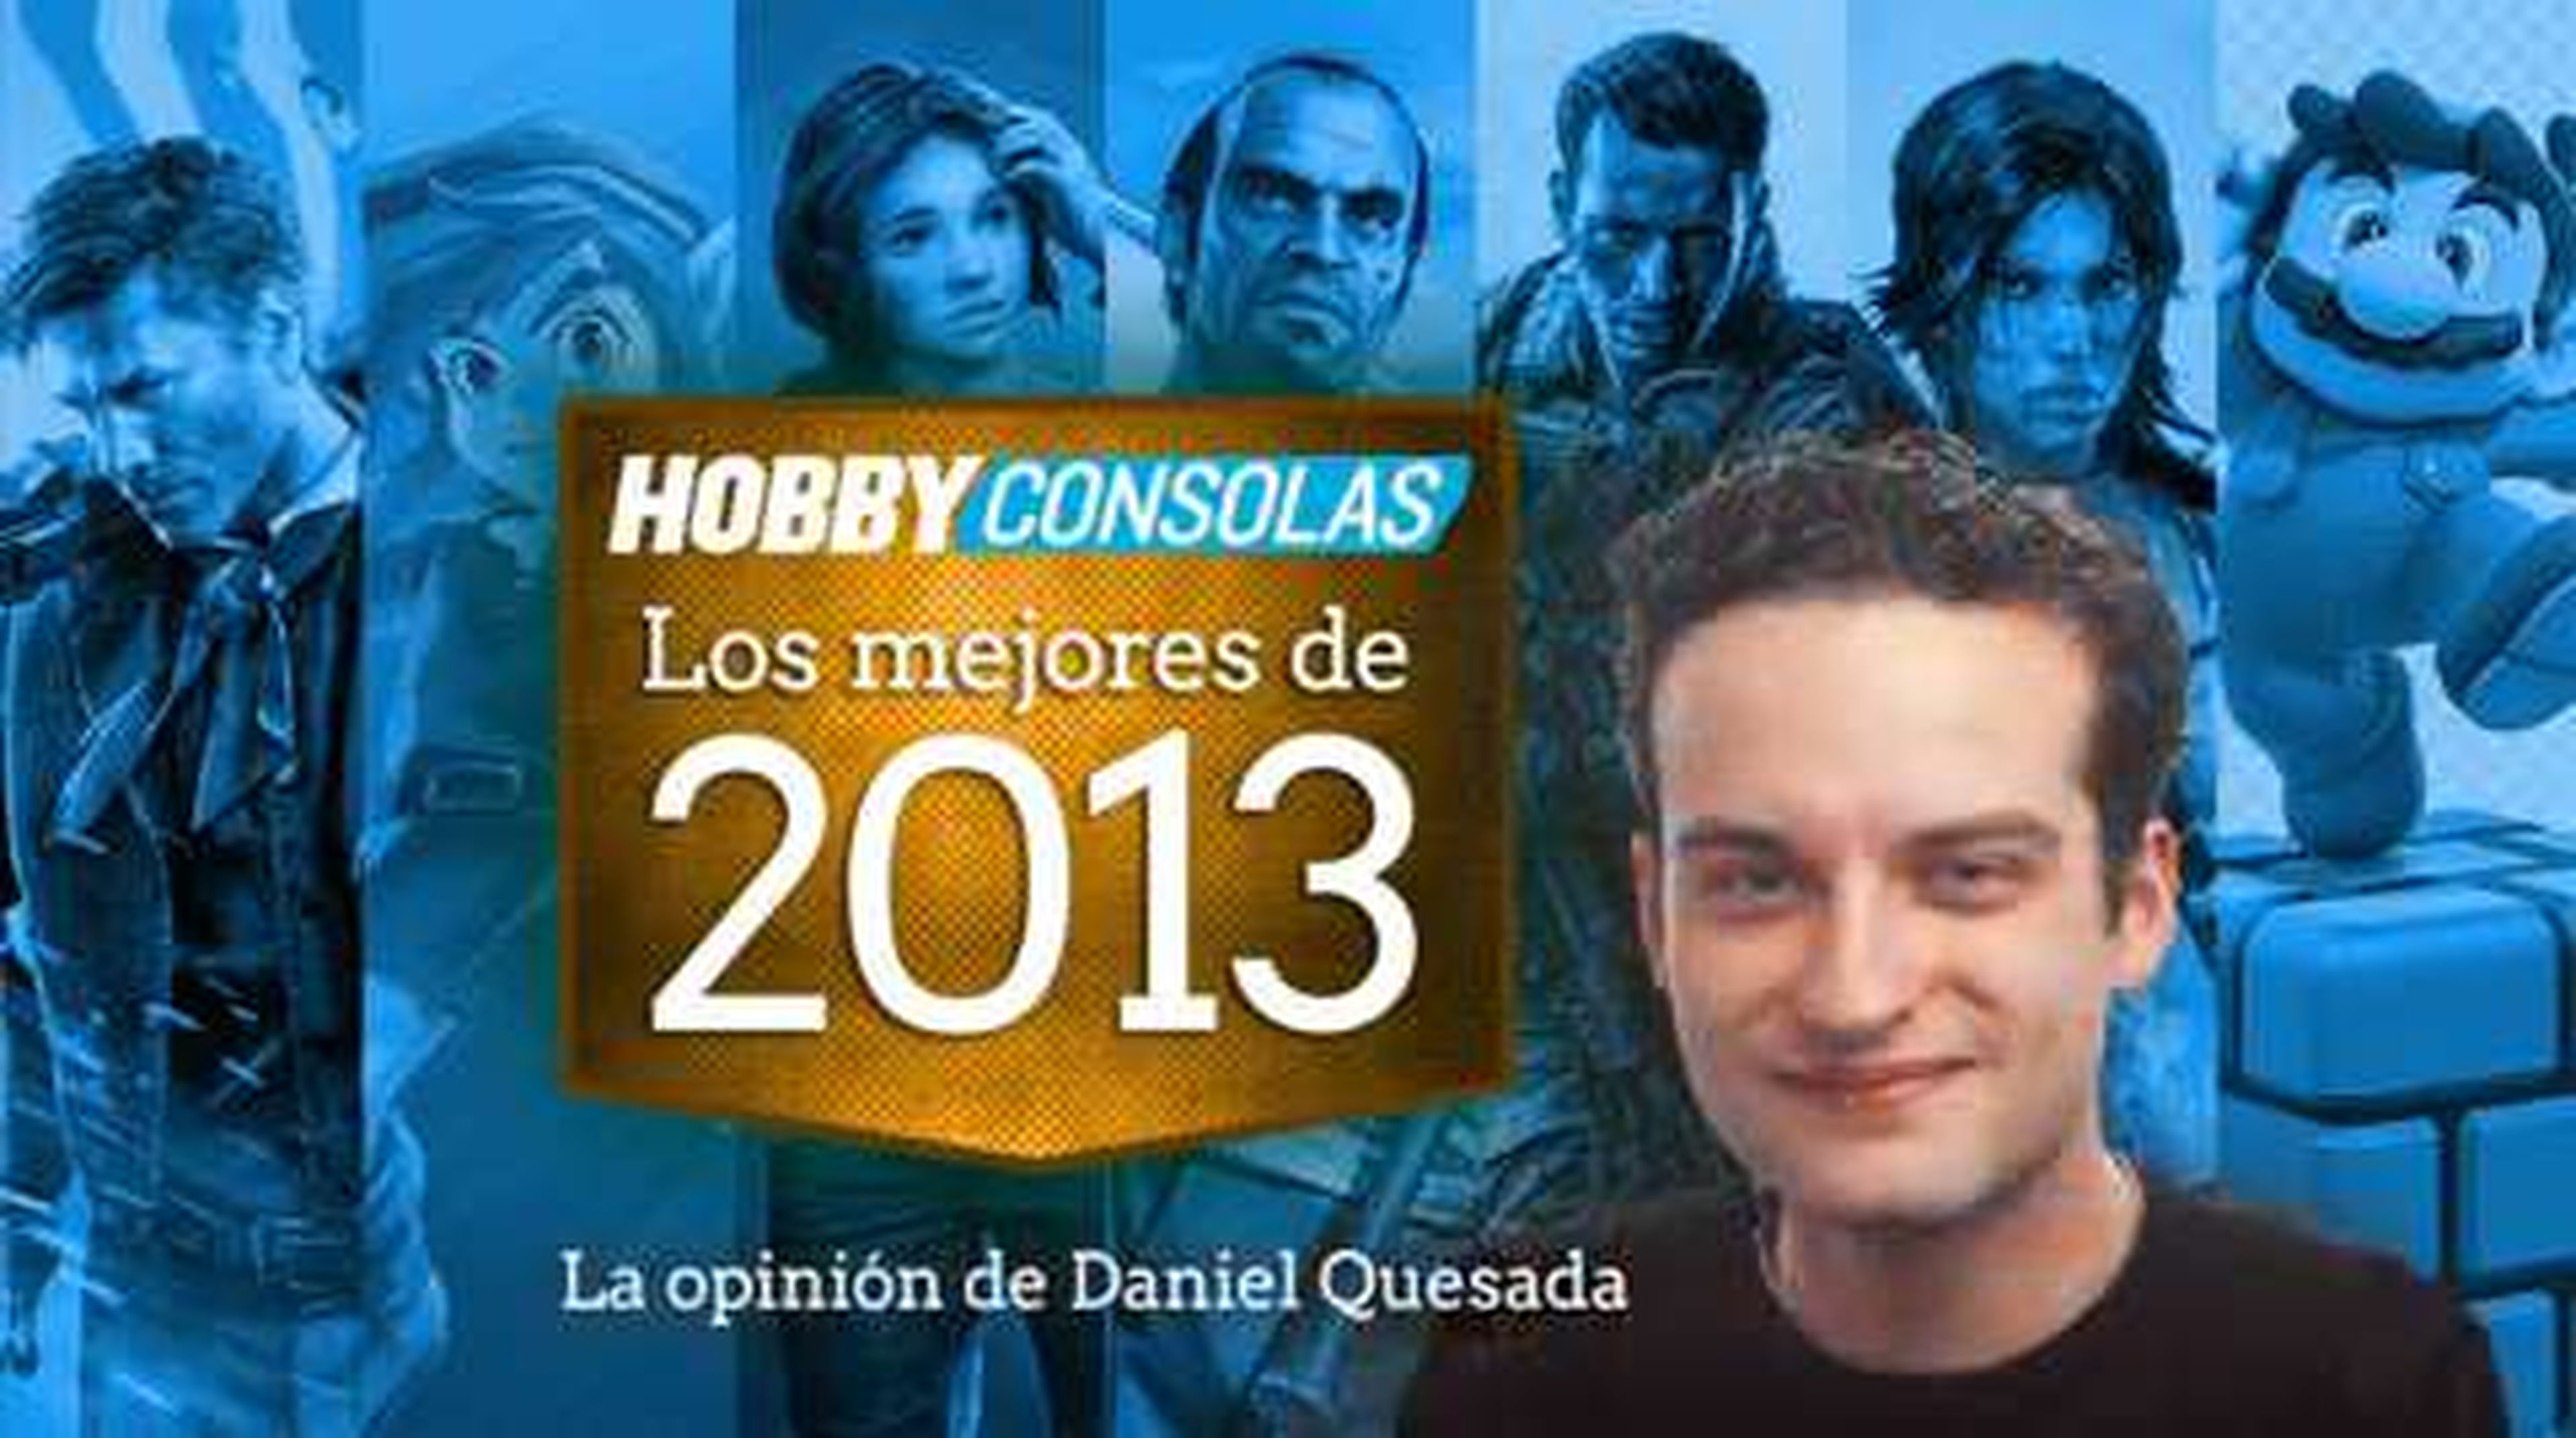 Lo mejor de 2013 (HD) Daniel Quesada en HobbyConsolas.com